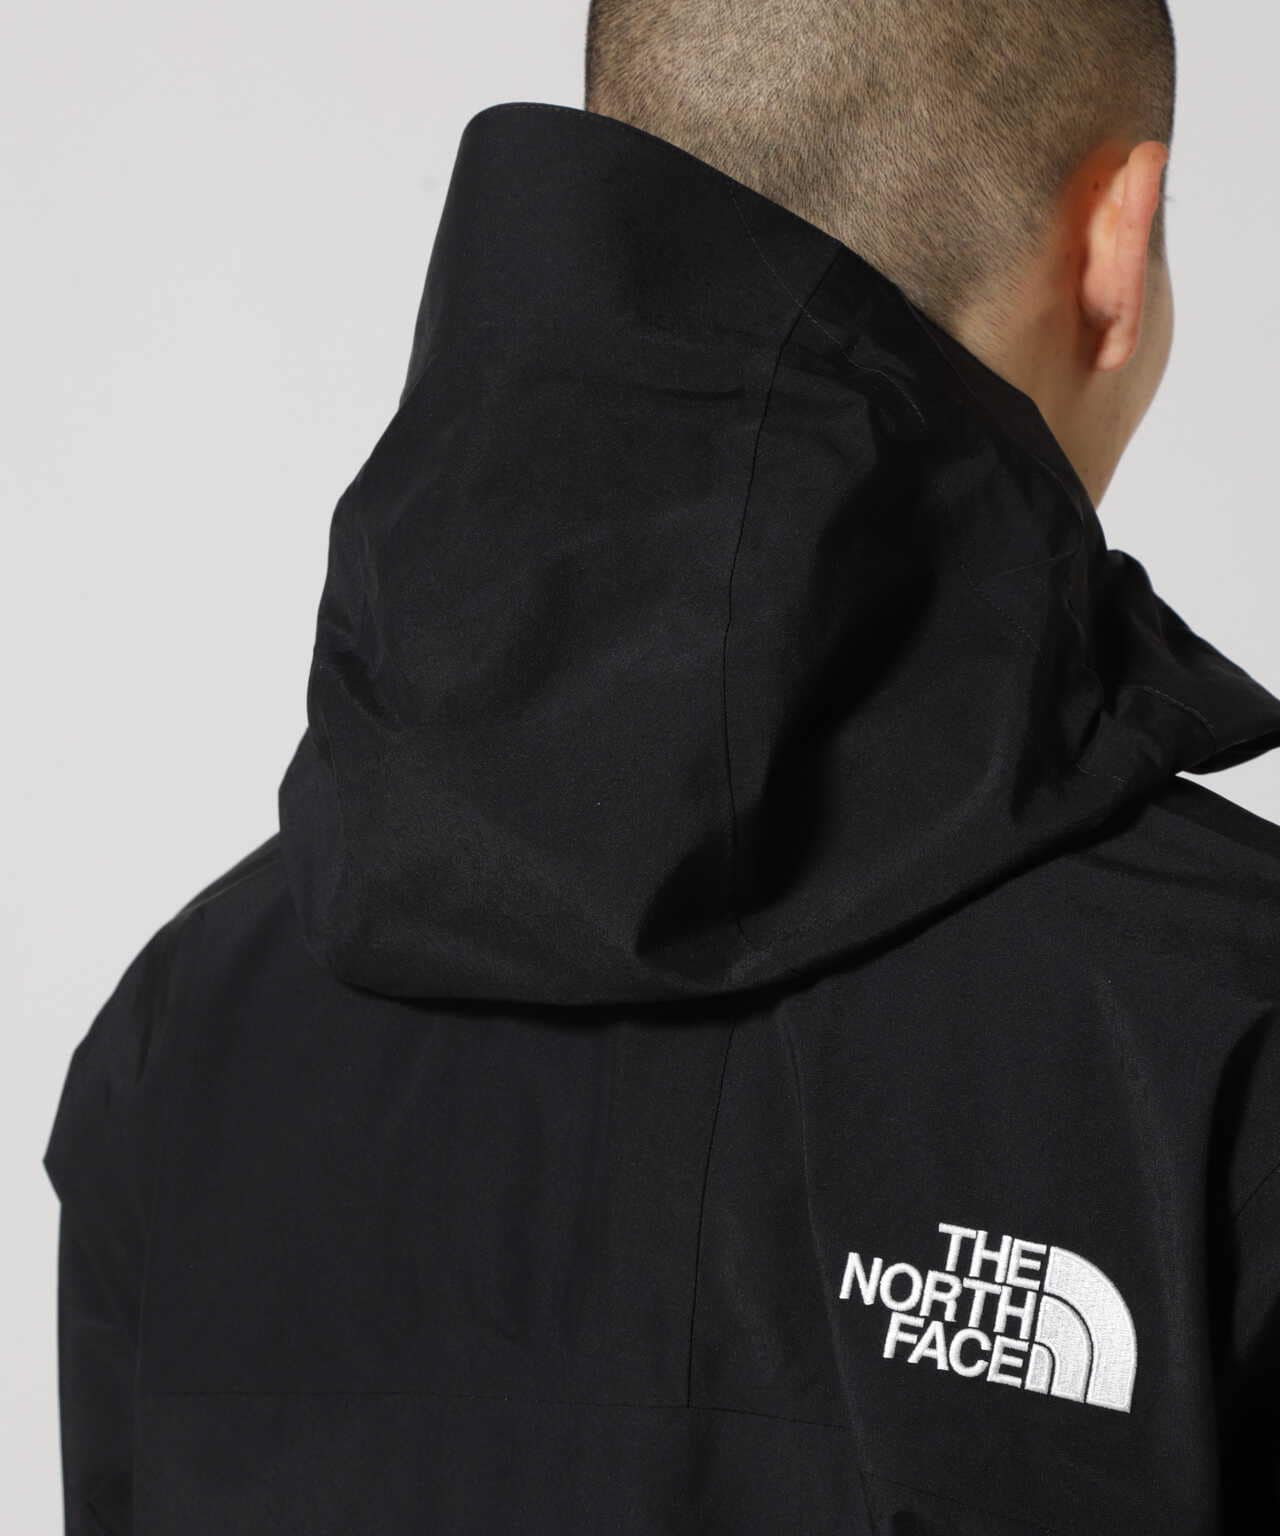 THE NORTH FACE(ザ・ノース・フェイス) Mountain Jacket マウンテン